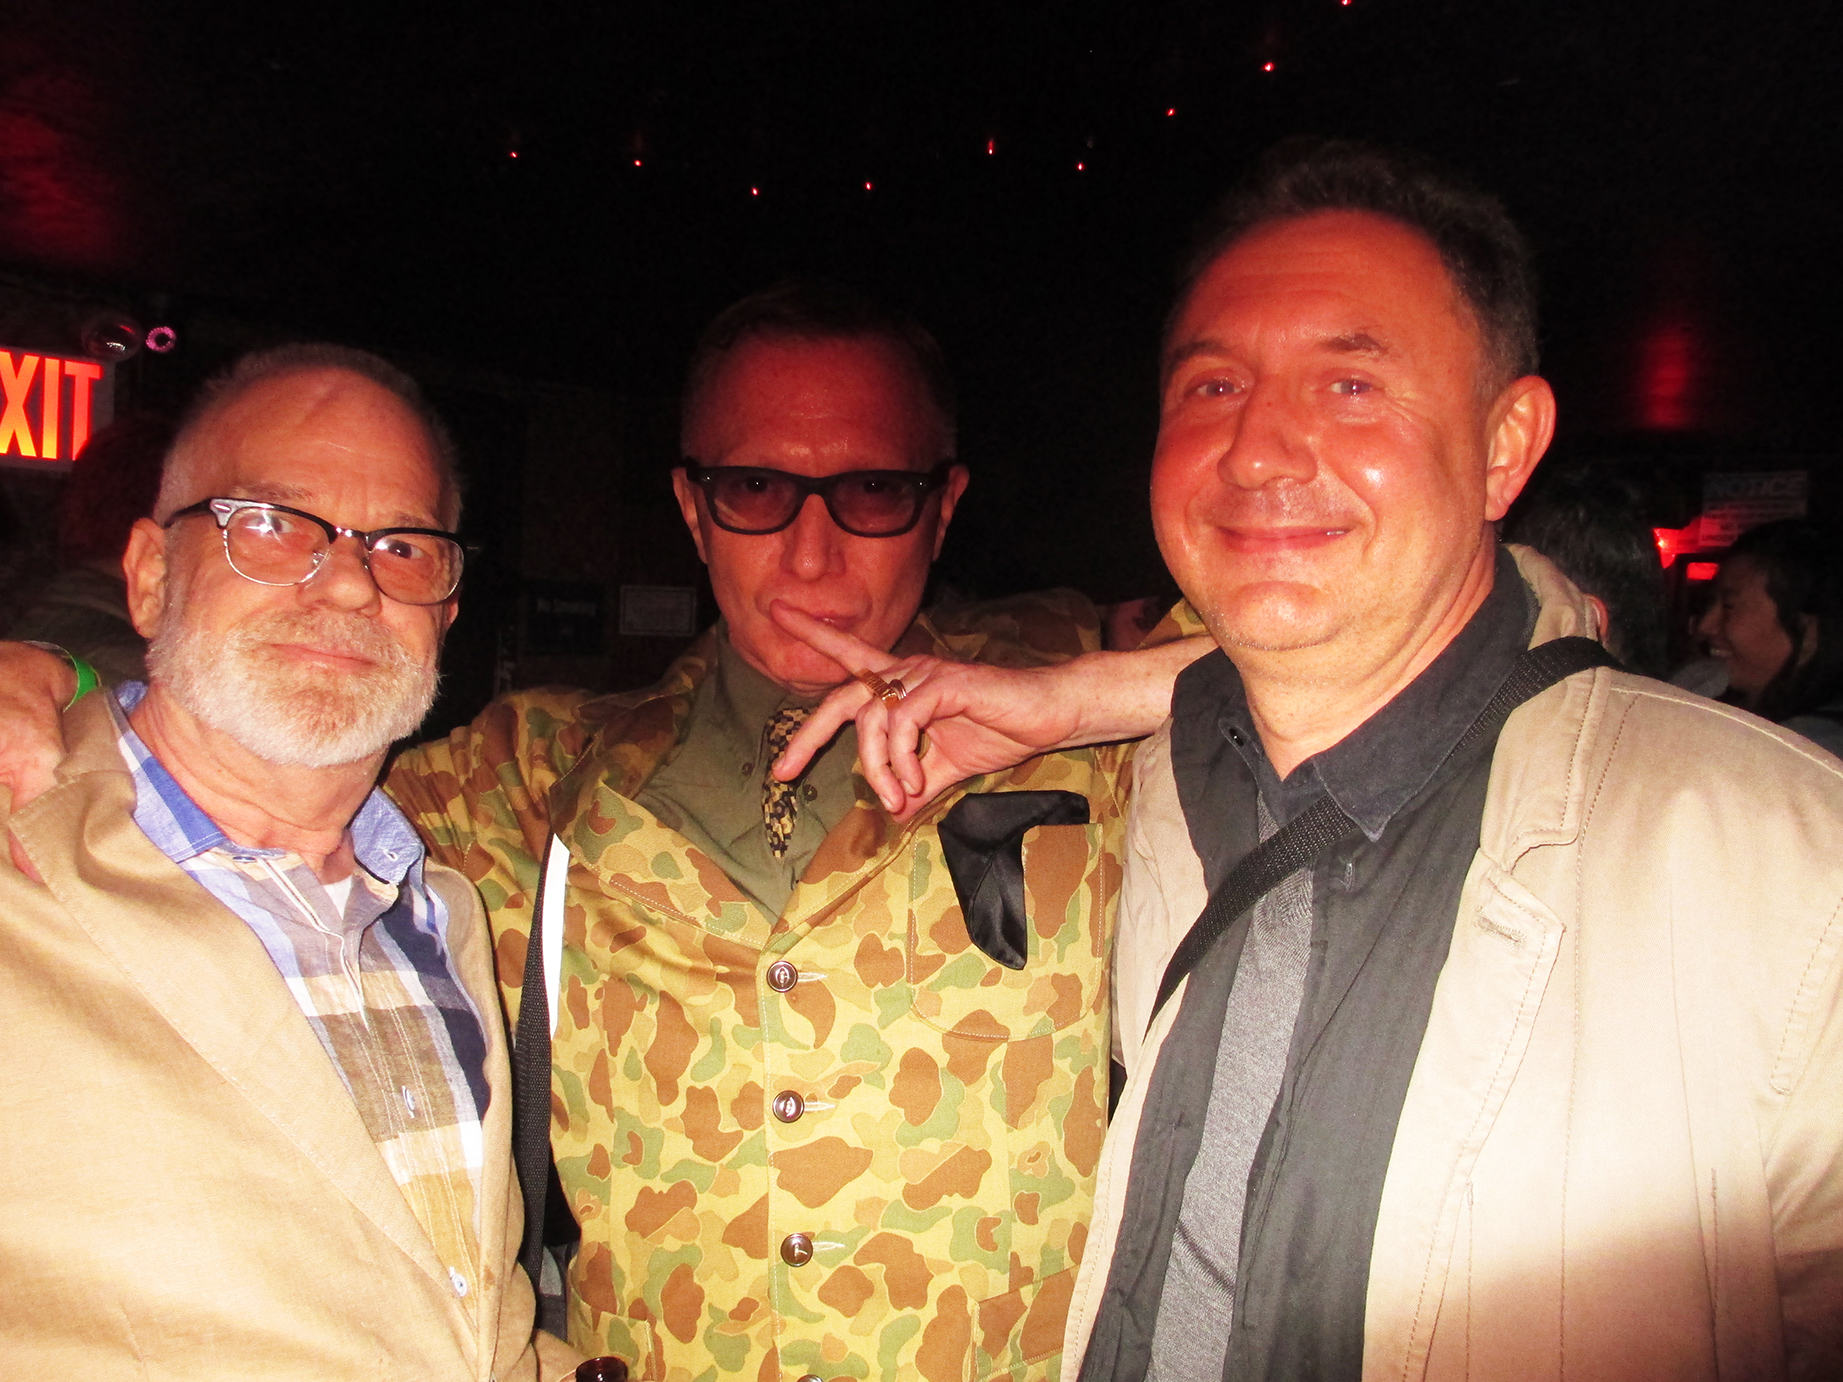 Bruce with Marius Z Urbaniak (right) Jack Sanders on Left